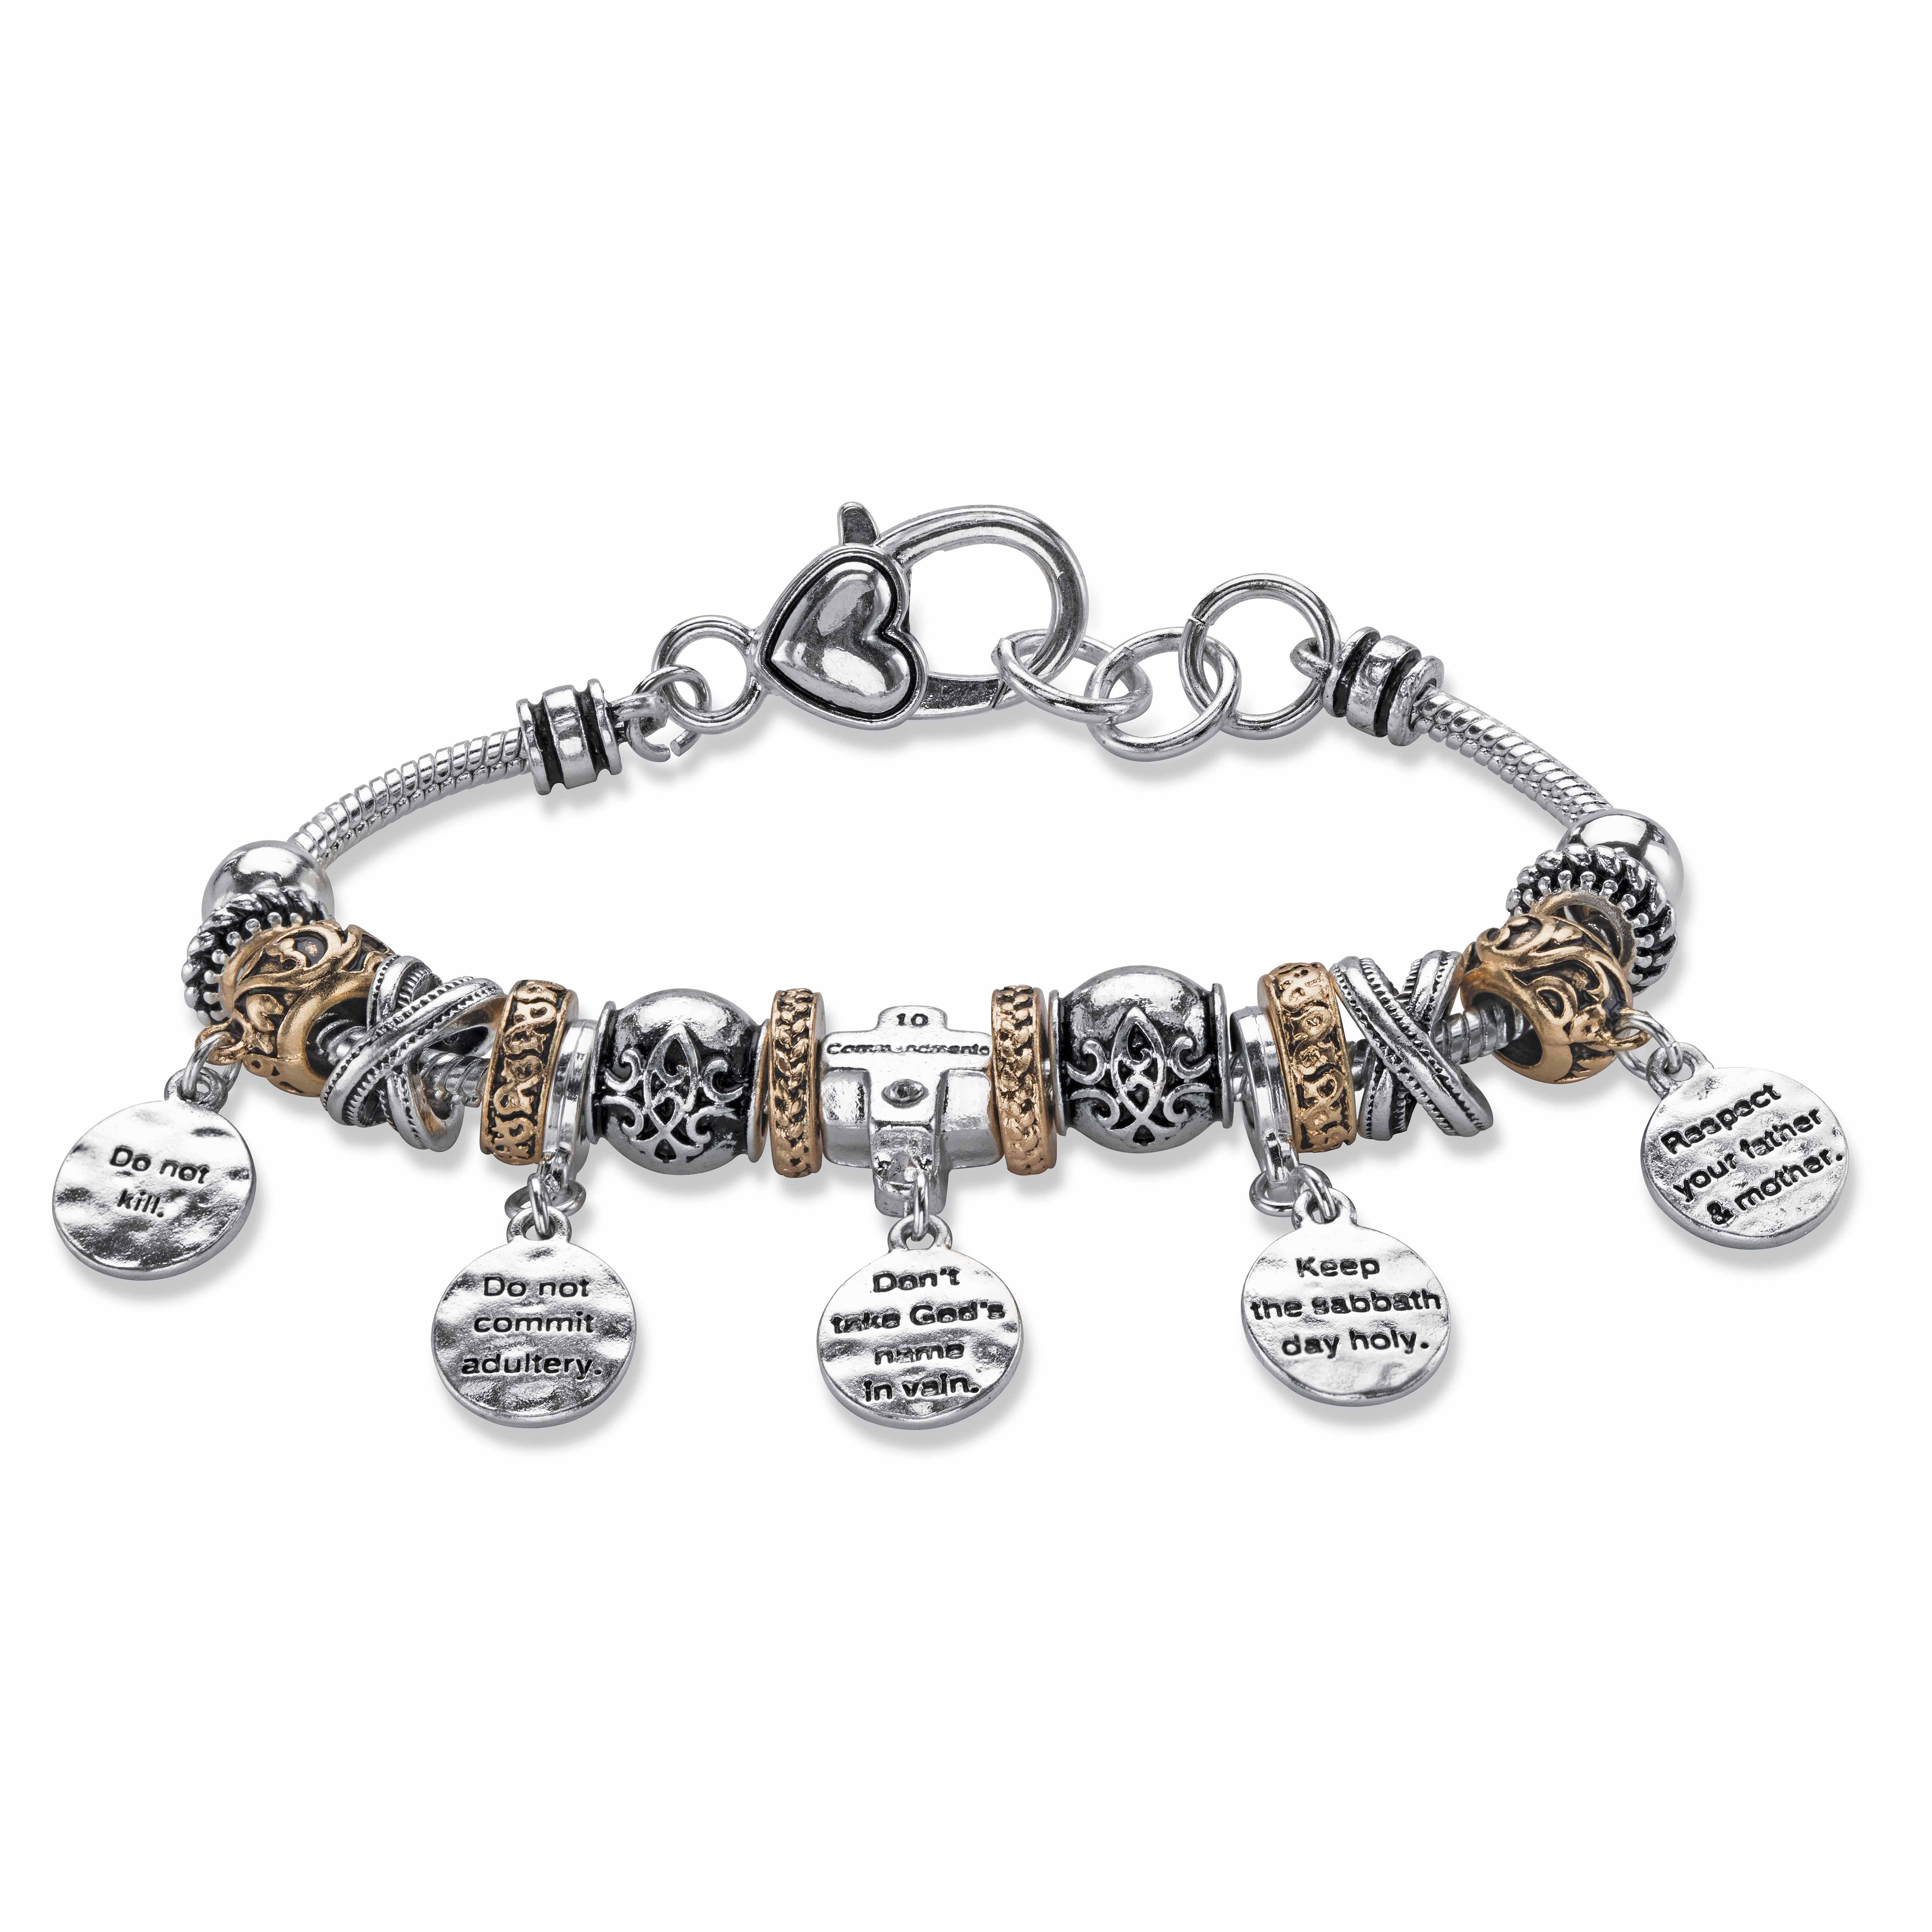 PalmBeach Jewelry Ten Commandments Bali-Style Beaded Charm Bracelet in Two-Tone Goldtone and Silvertone 8"